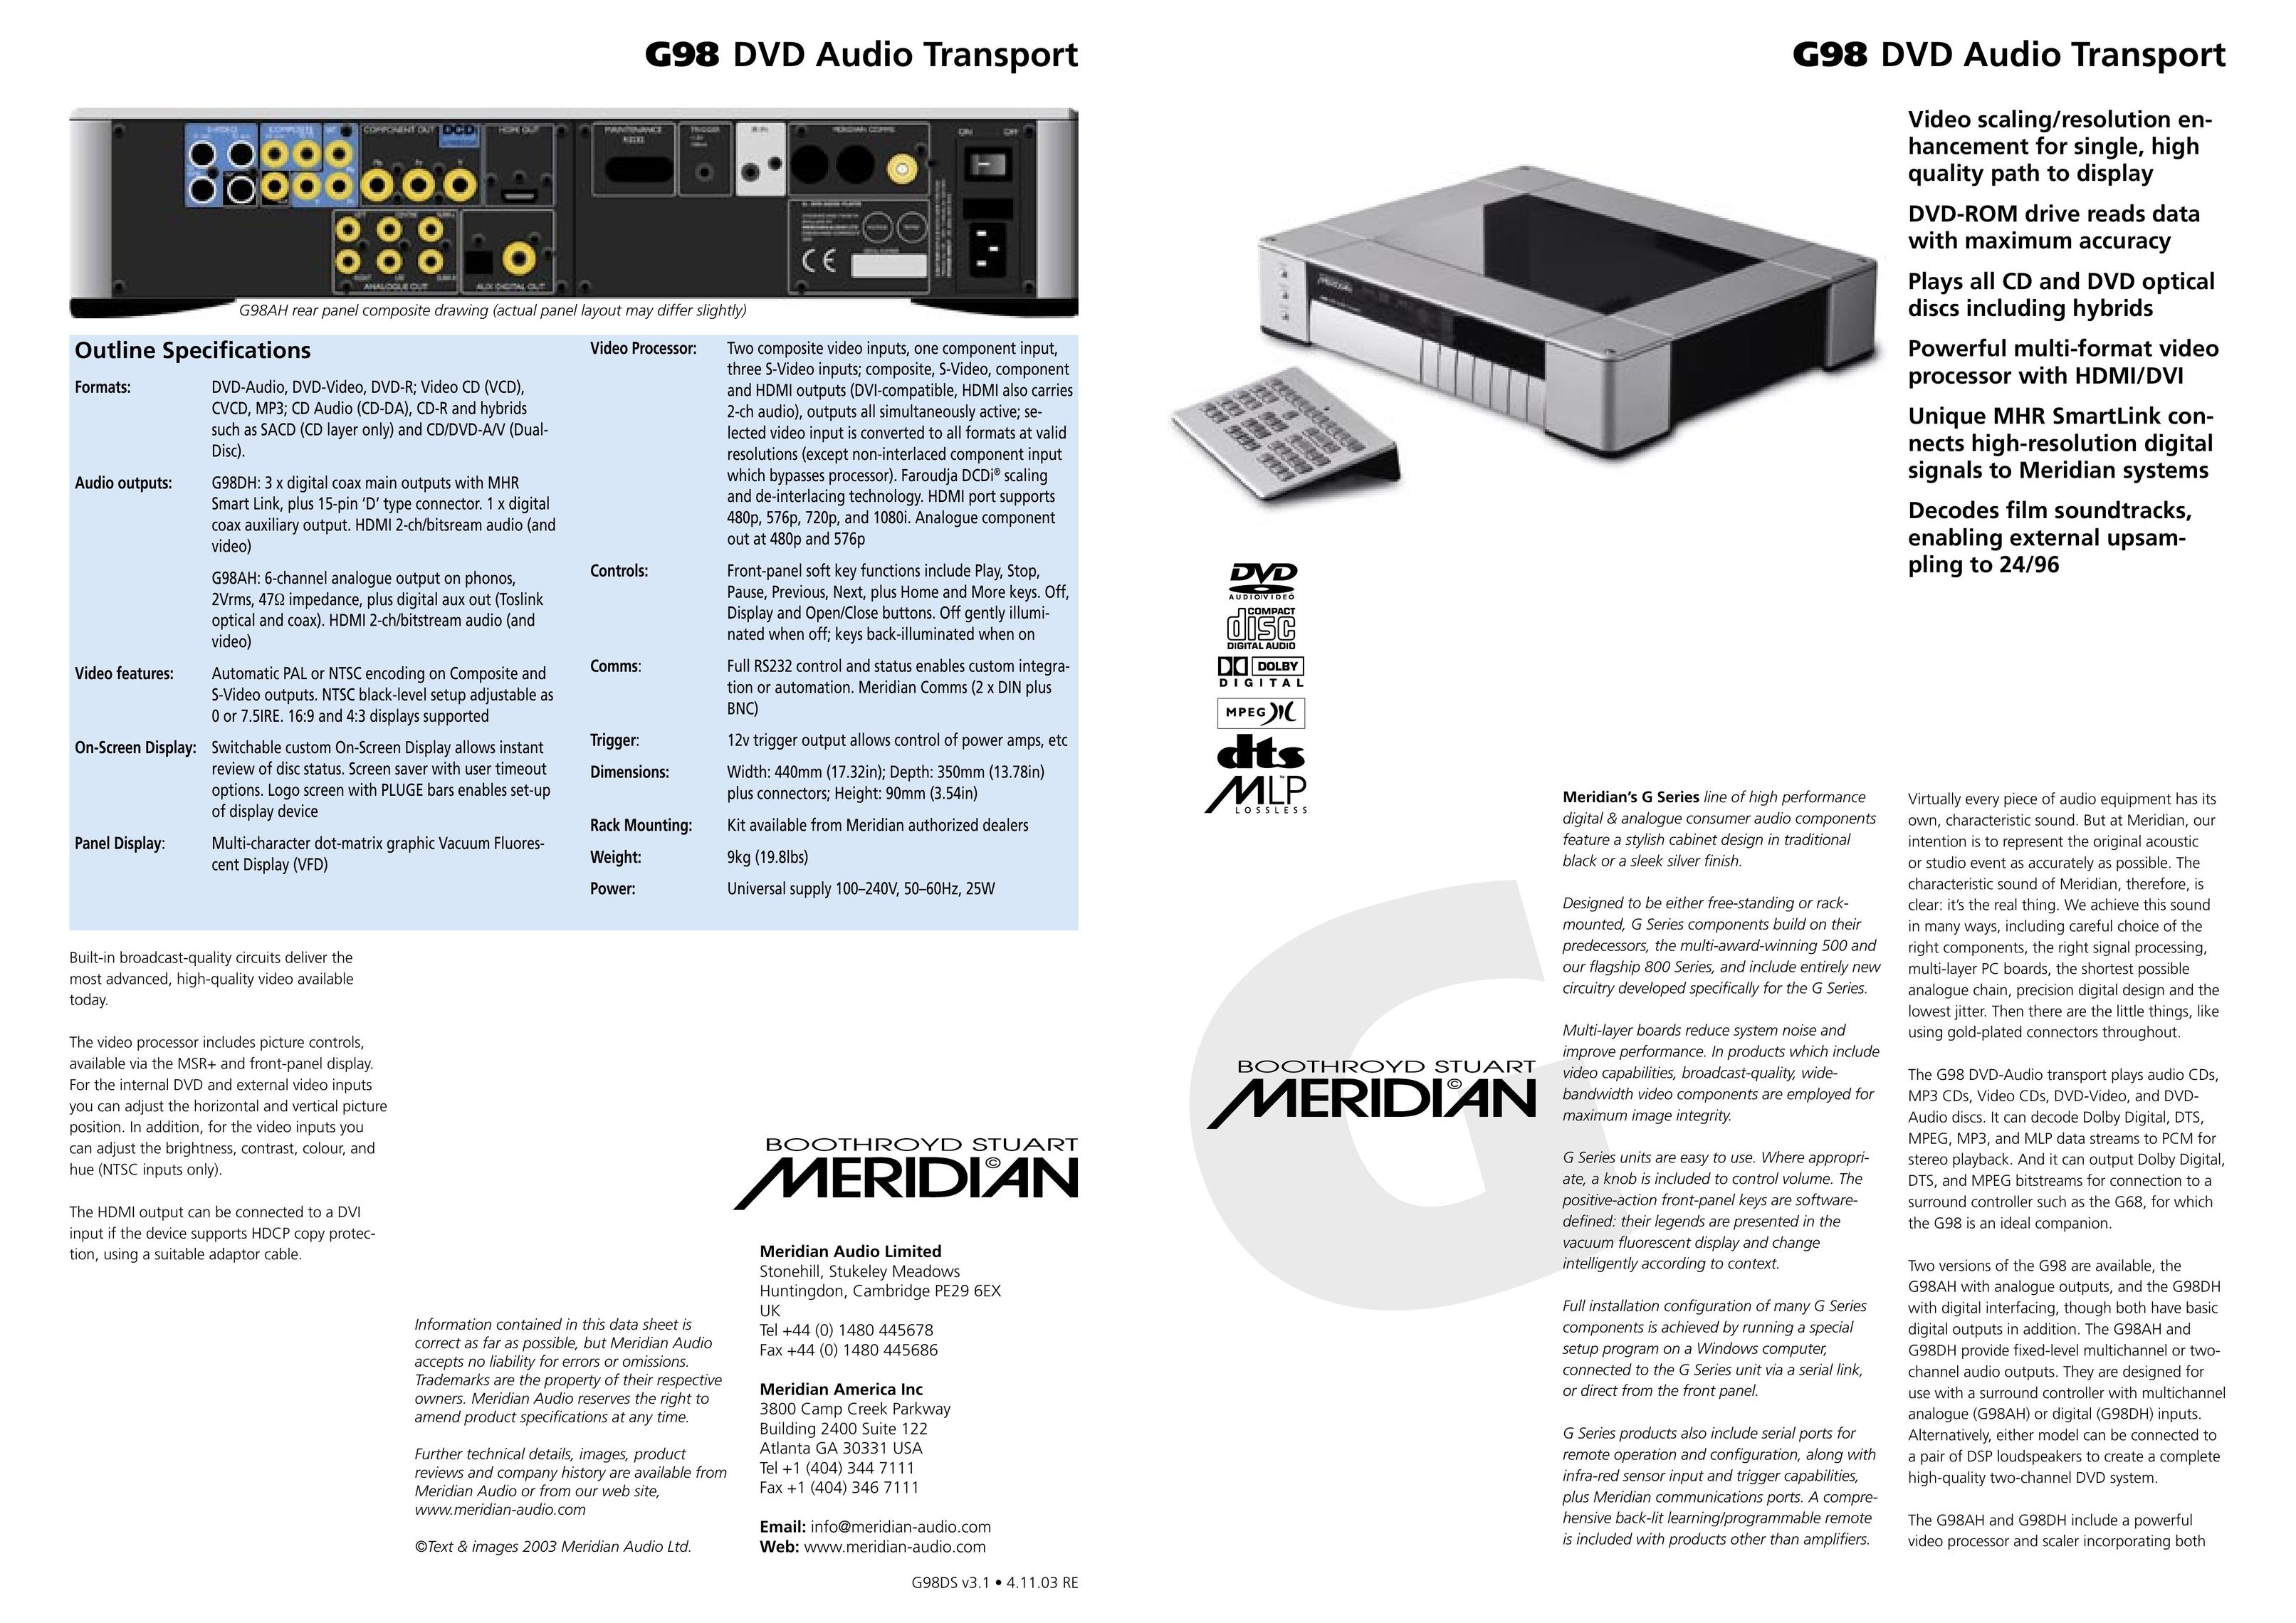 Meridian Audio G98 TV Video Accessories User Manual